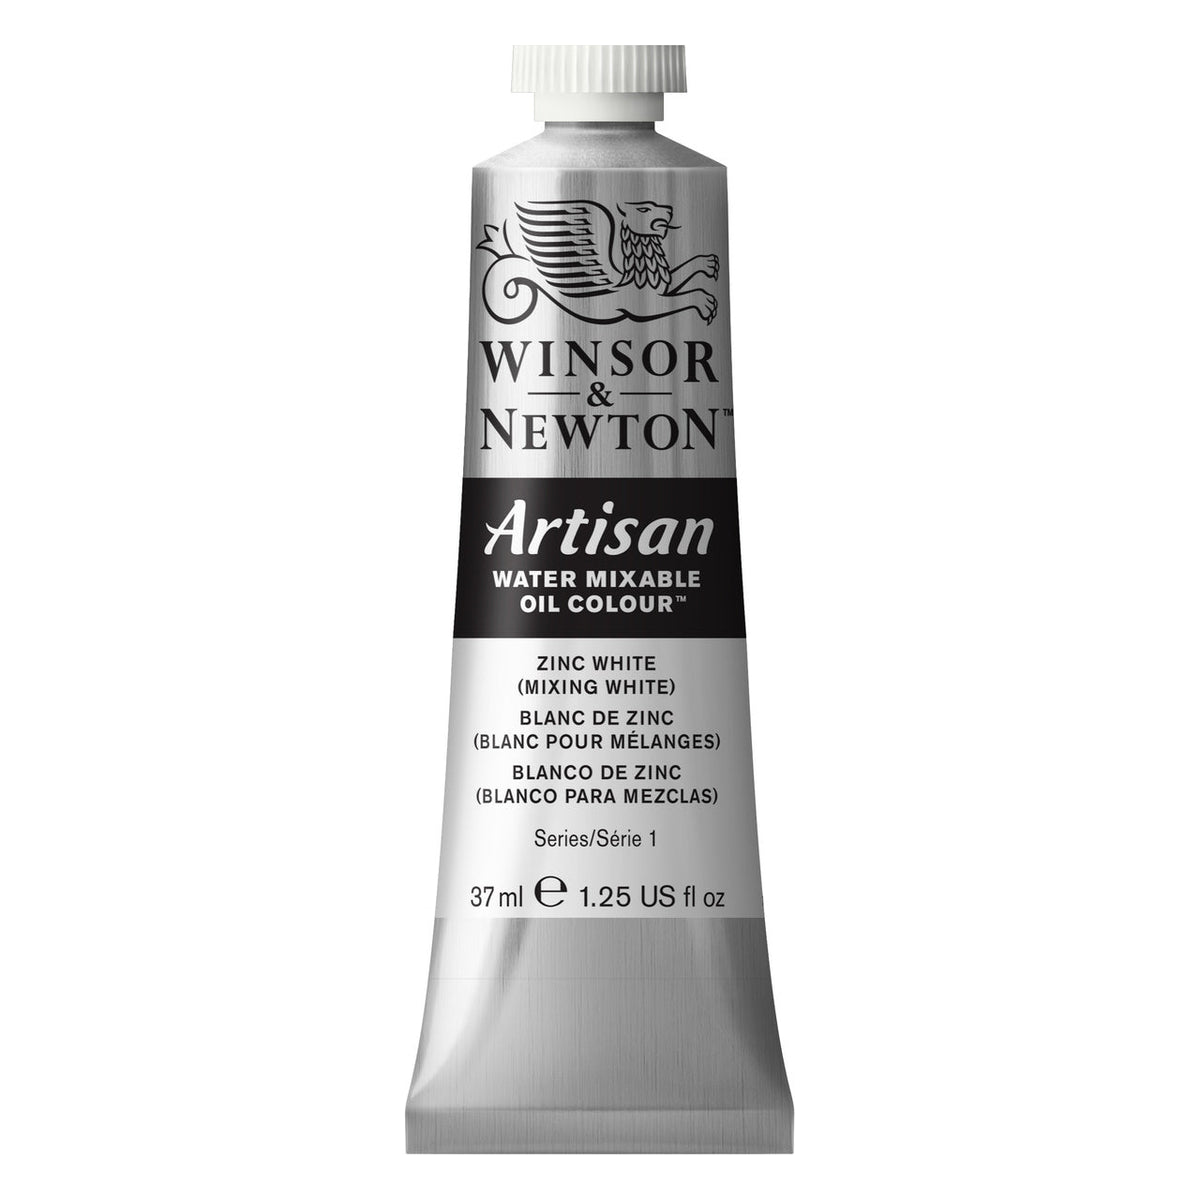 Winsor & Newton Artisan Water Mixable Oil 37ml - Zinc (mixing) White - merriartist.com